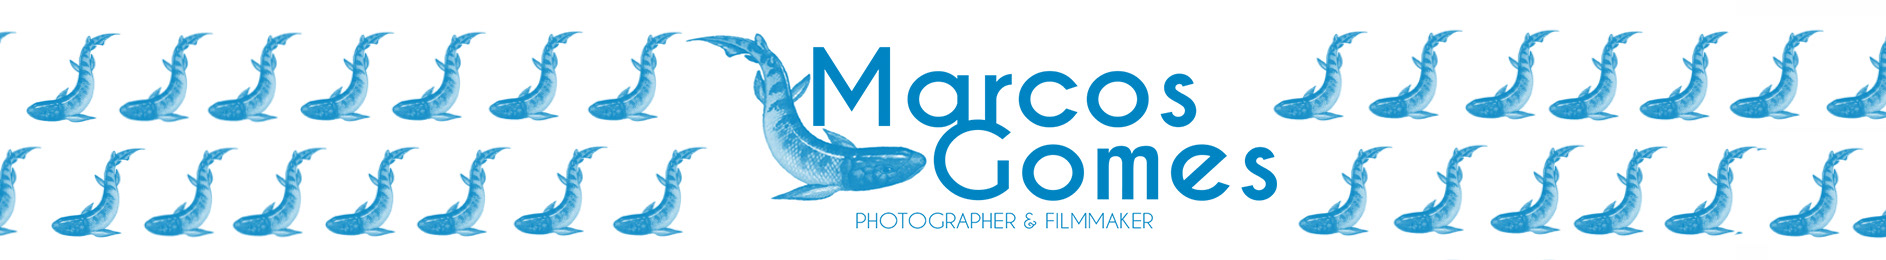 Banner de perfil de Marcos Gomes